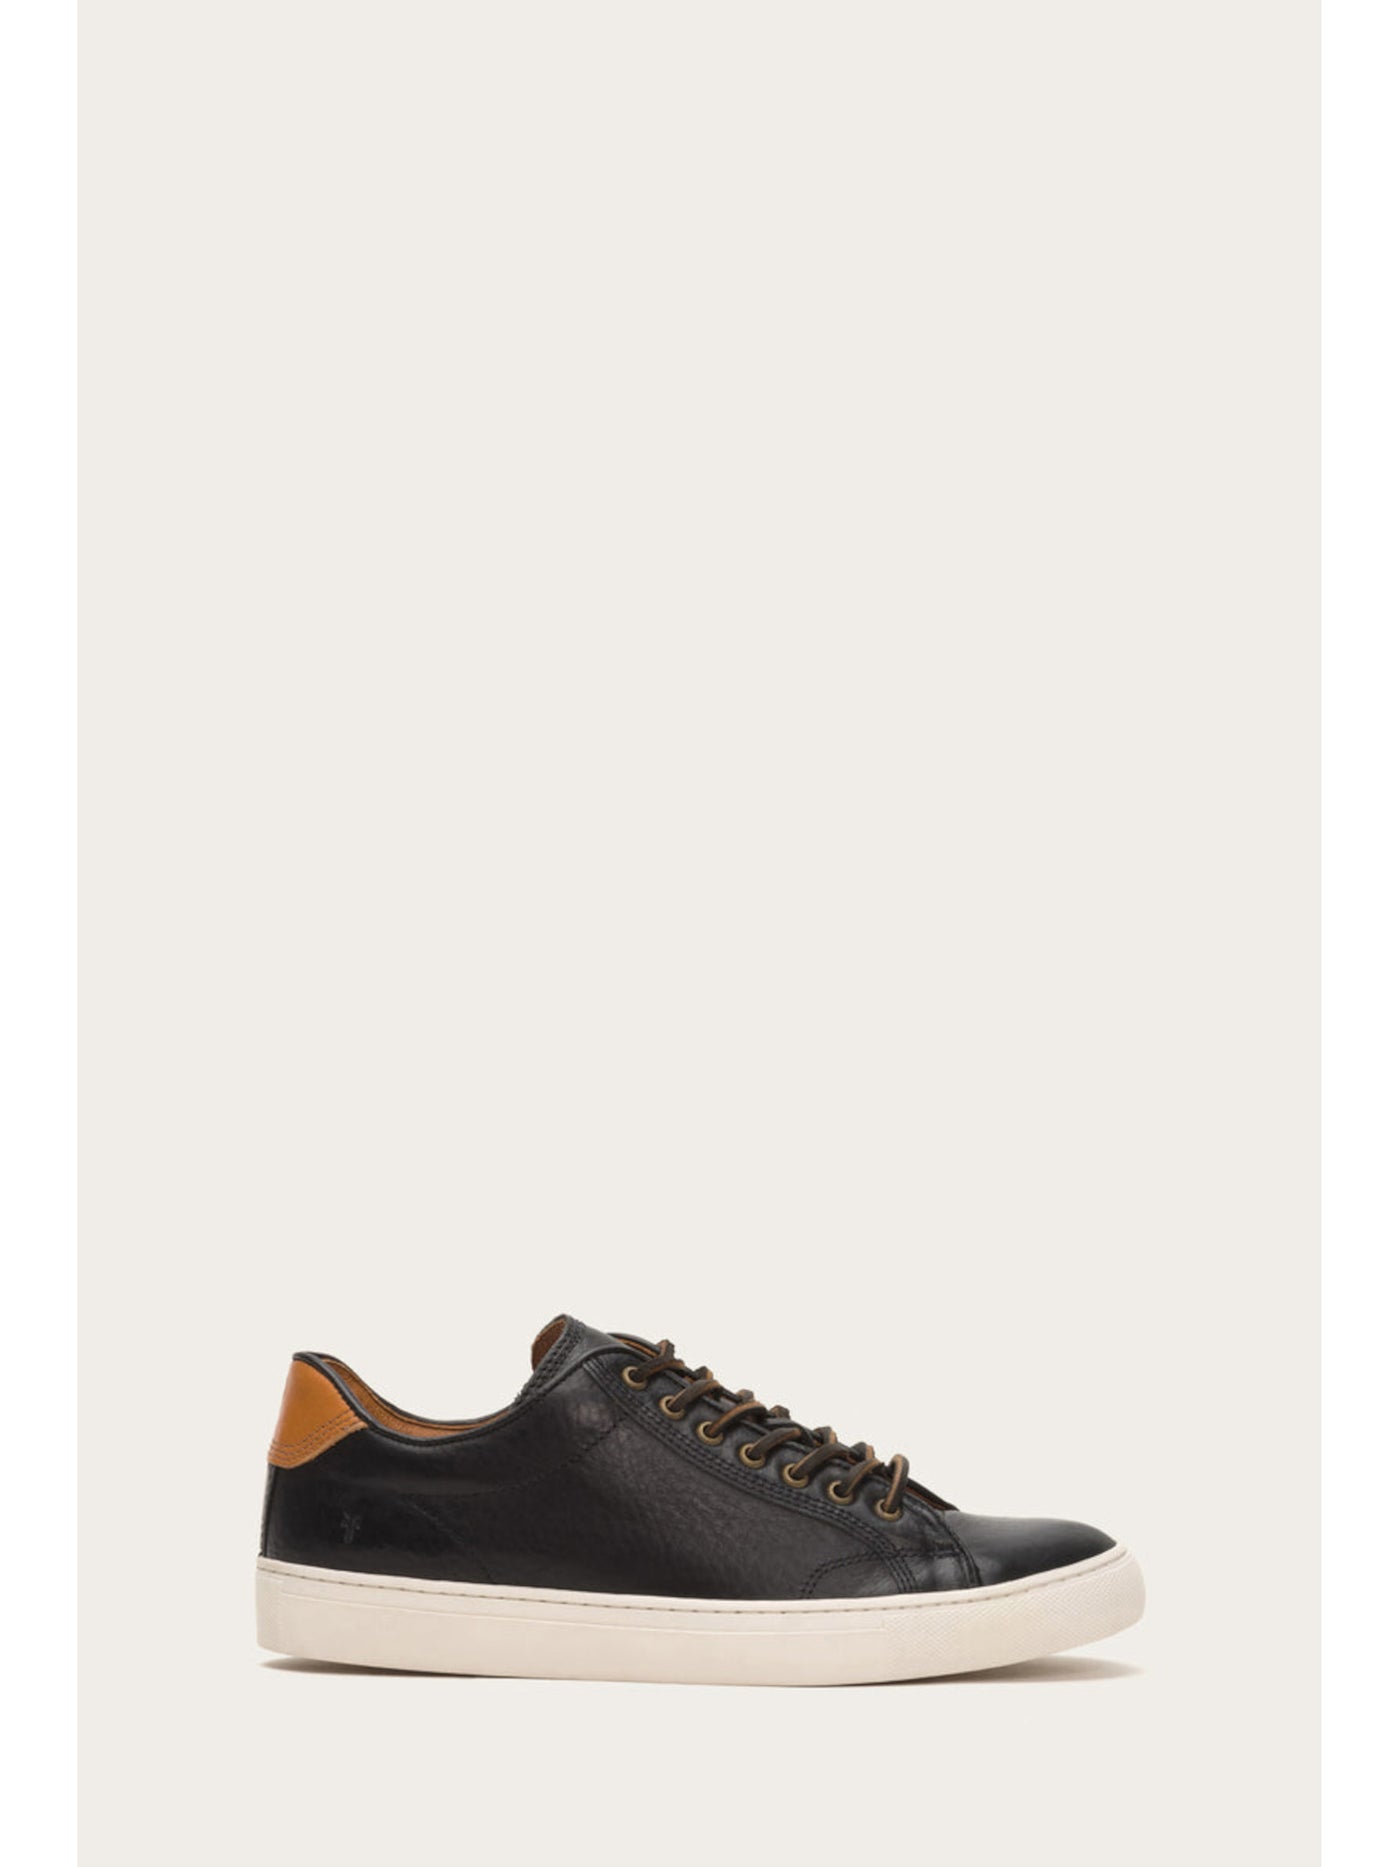 FRYE Mens Black Comfort Walker Round Toe Platform Lace-Up Leather Athletic Sneakers Shoes 7 M